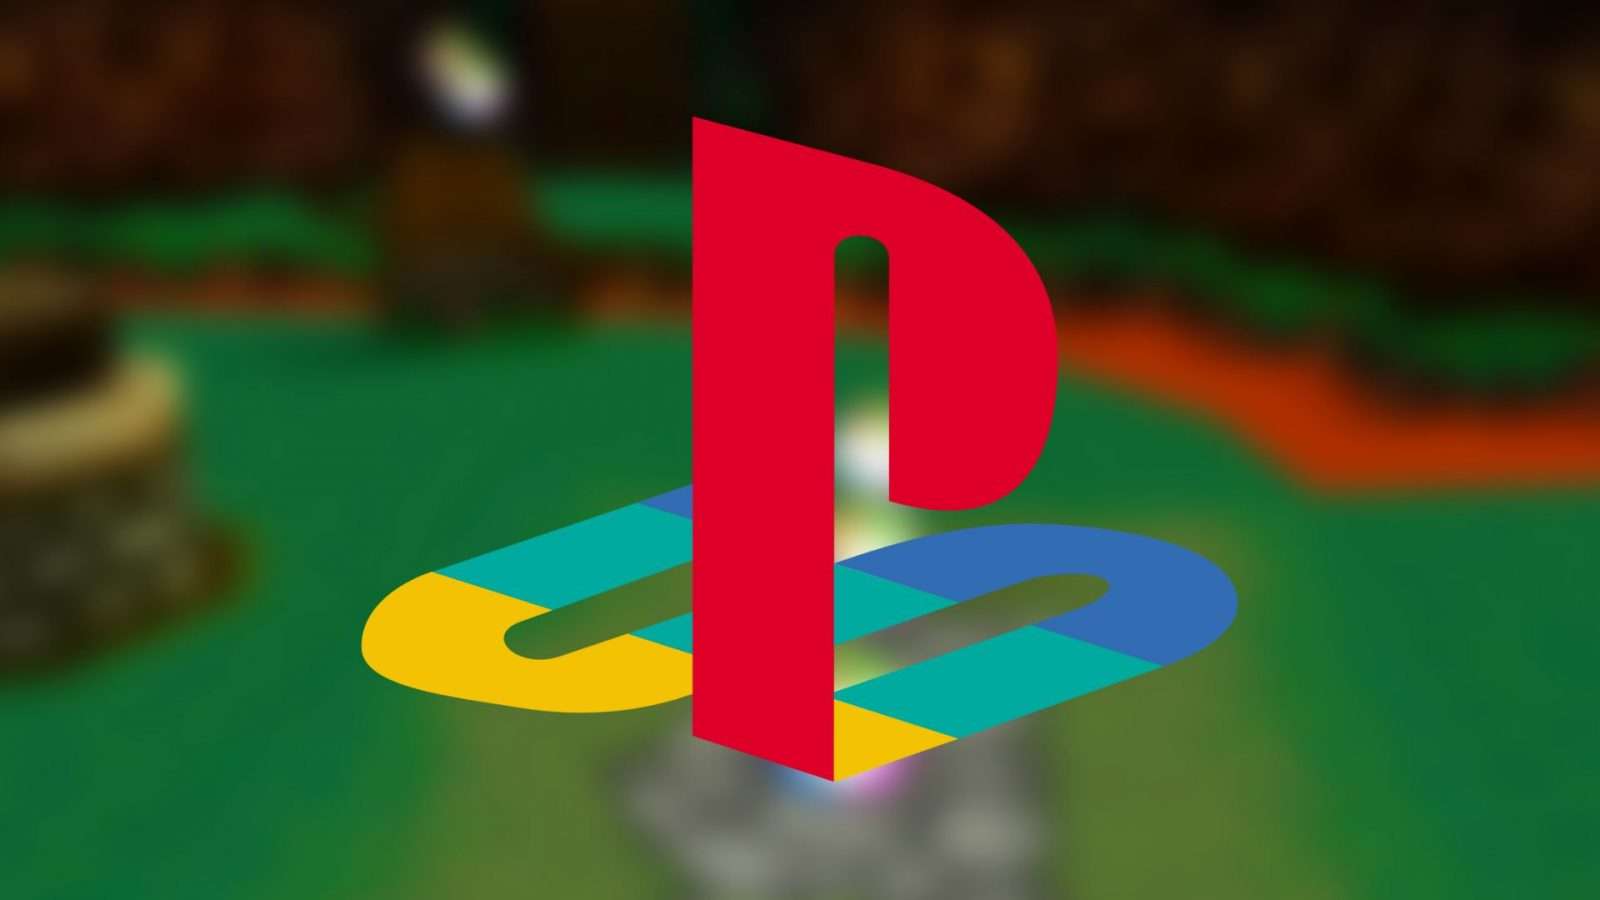 ps1 logo on croc background